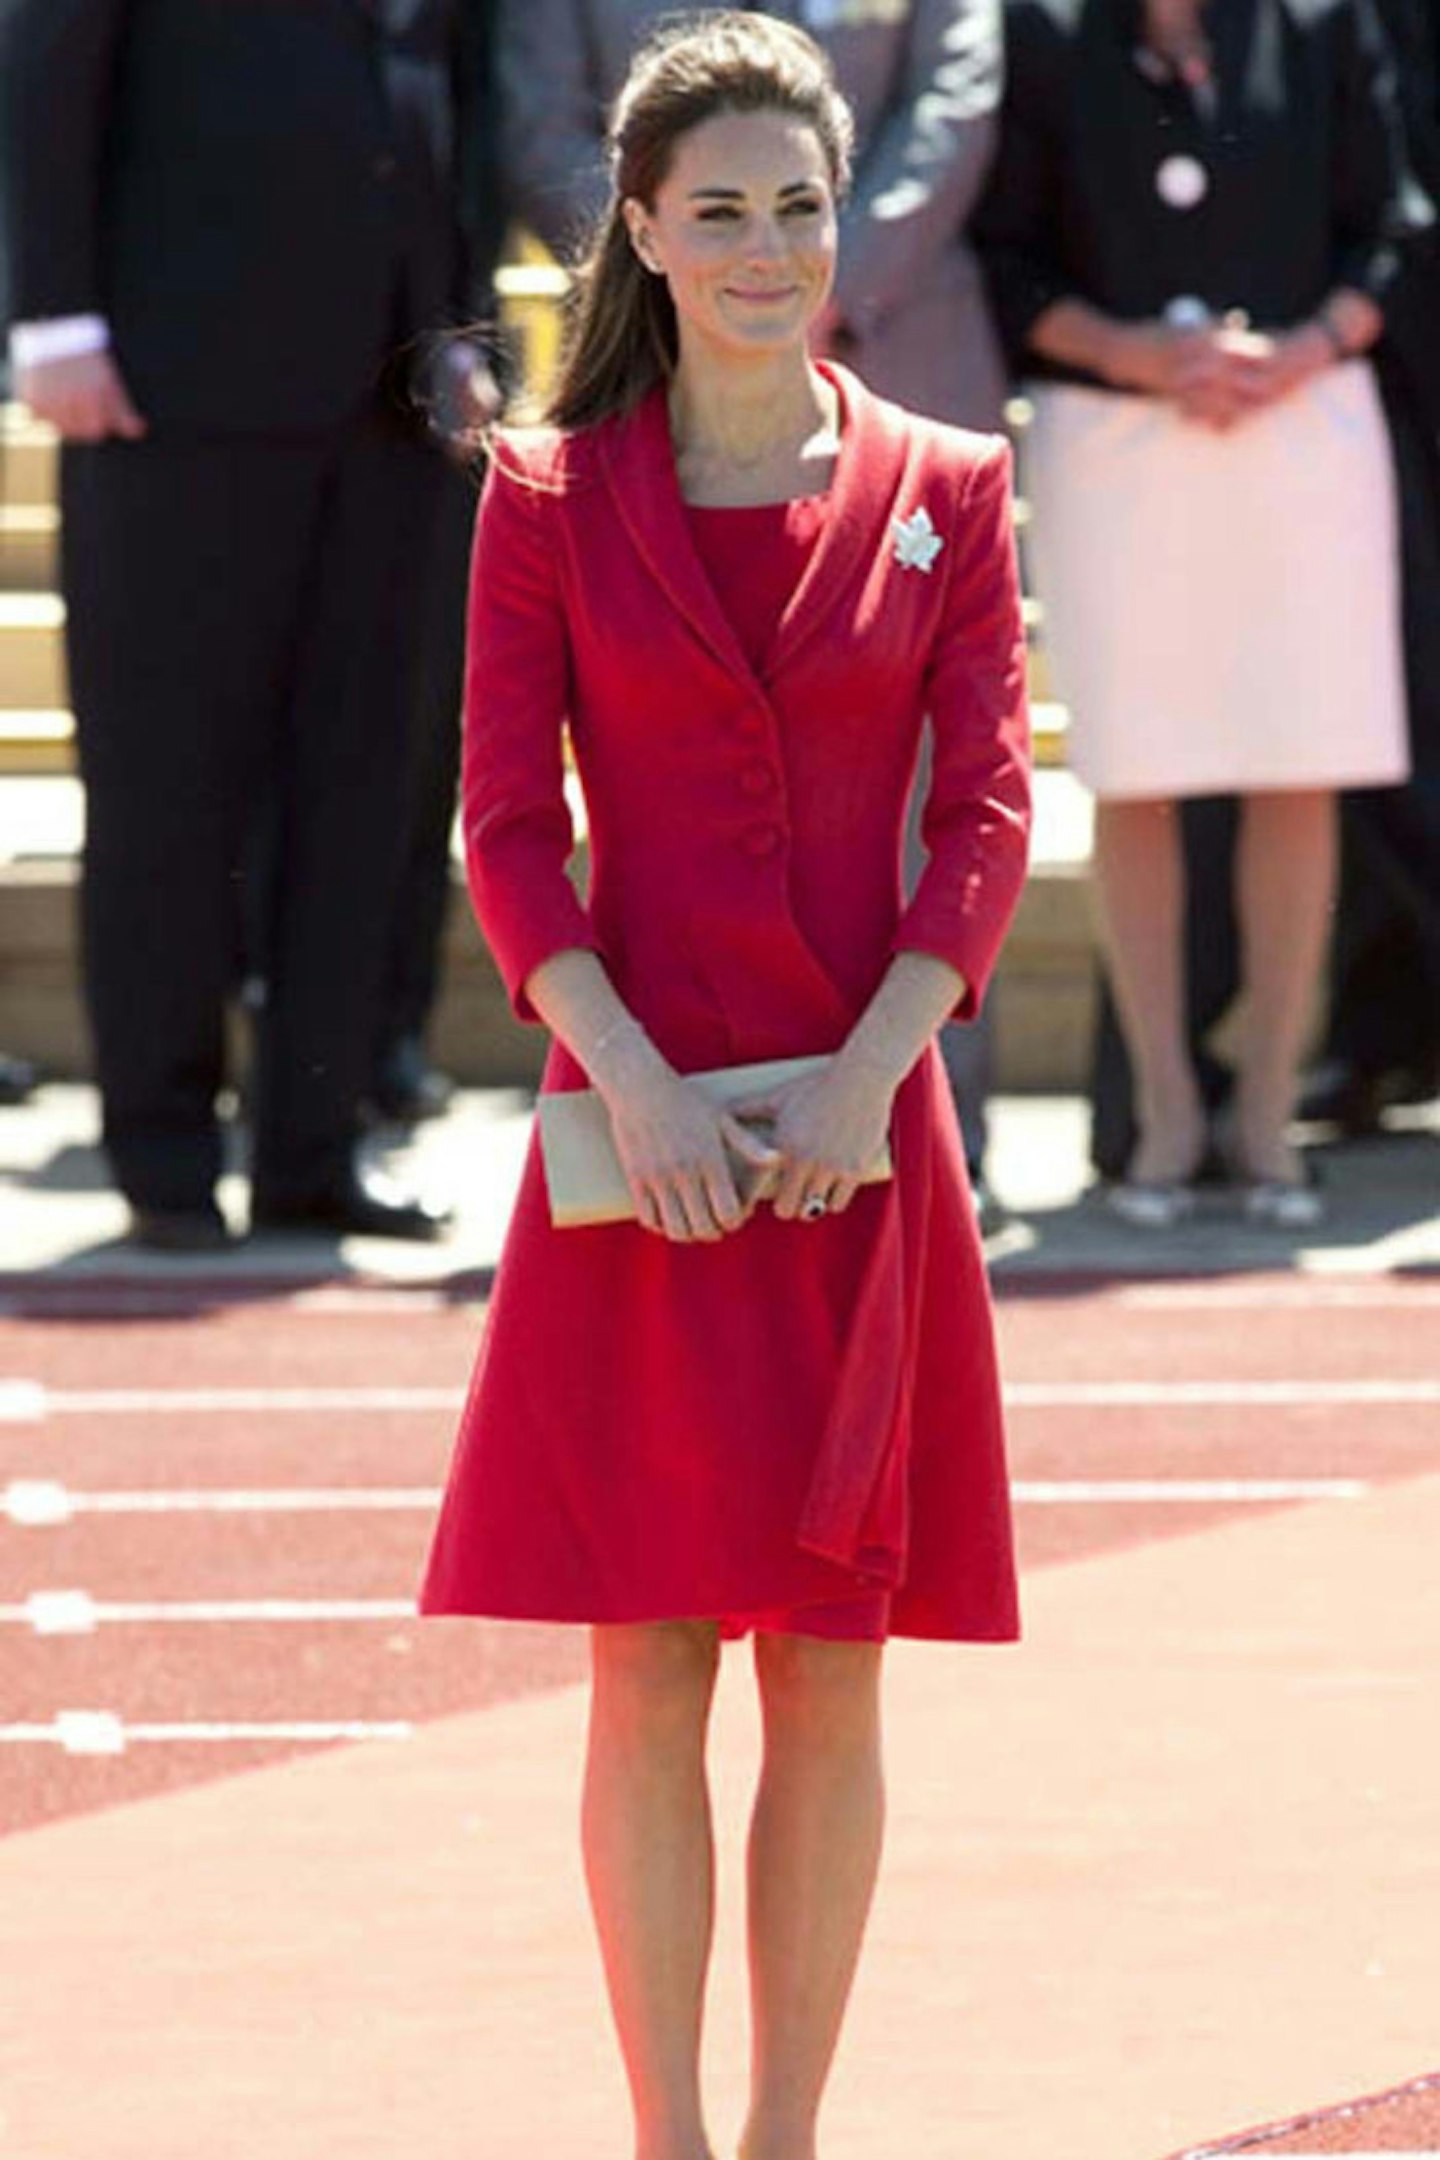 Kate Middleton at a North American Royal Visit, 8 July 2011